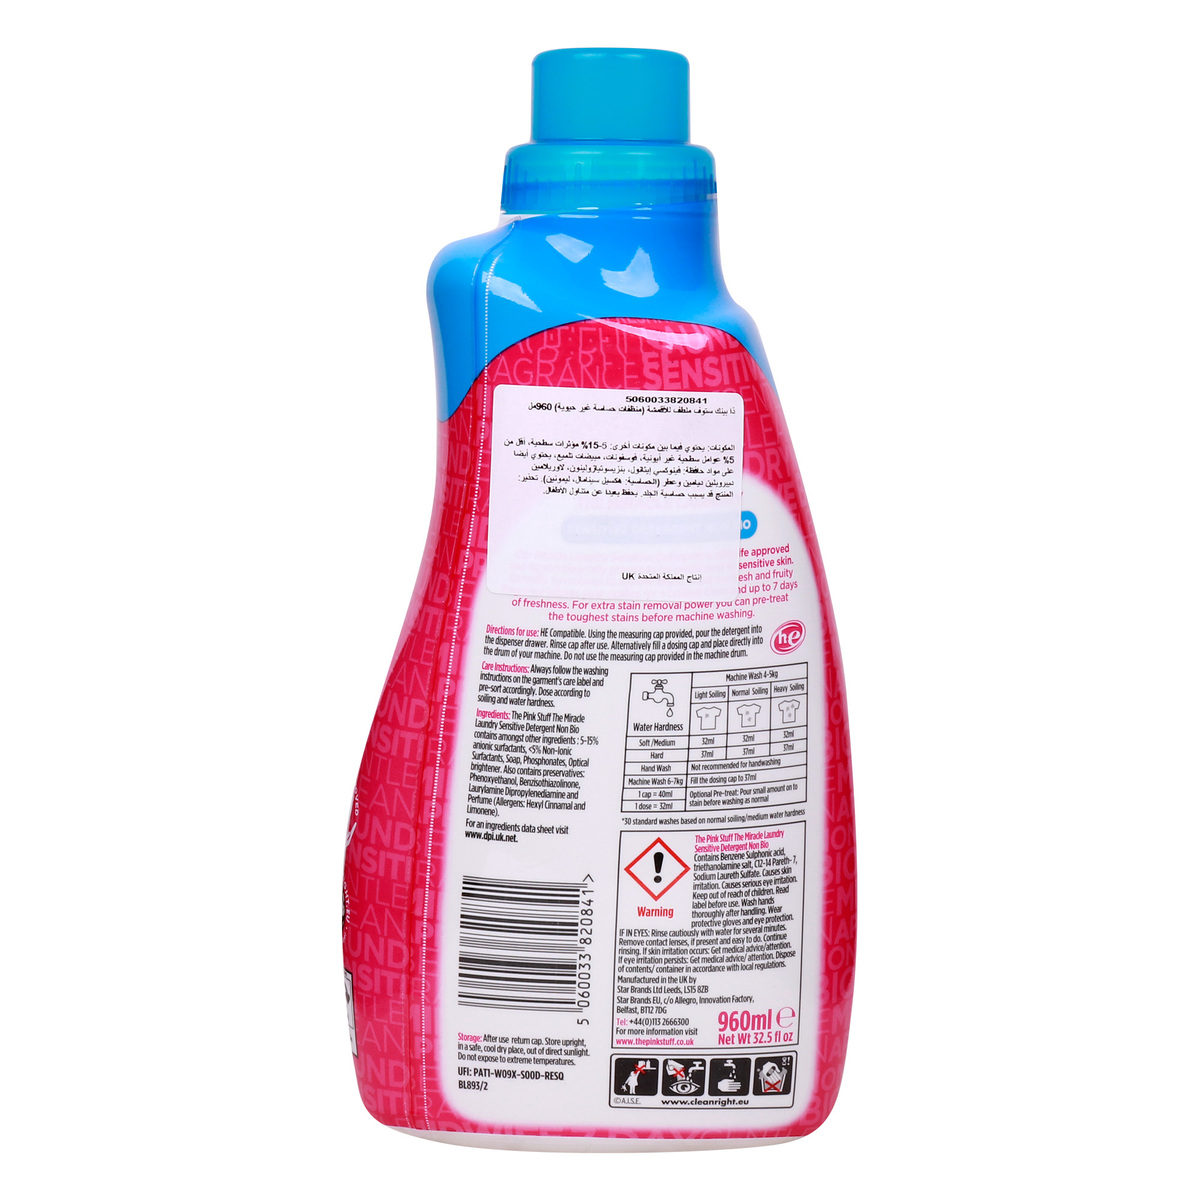 Star Drops Pink Stuff Miracle Non Bio Sensitive Laundry Detergent 960 ml